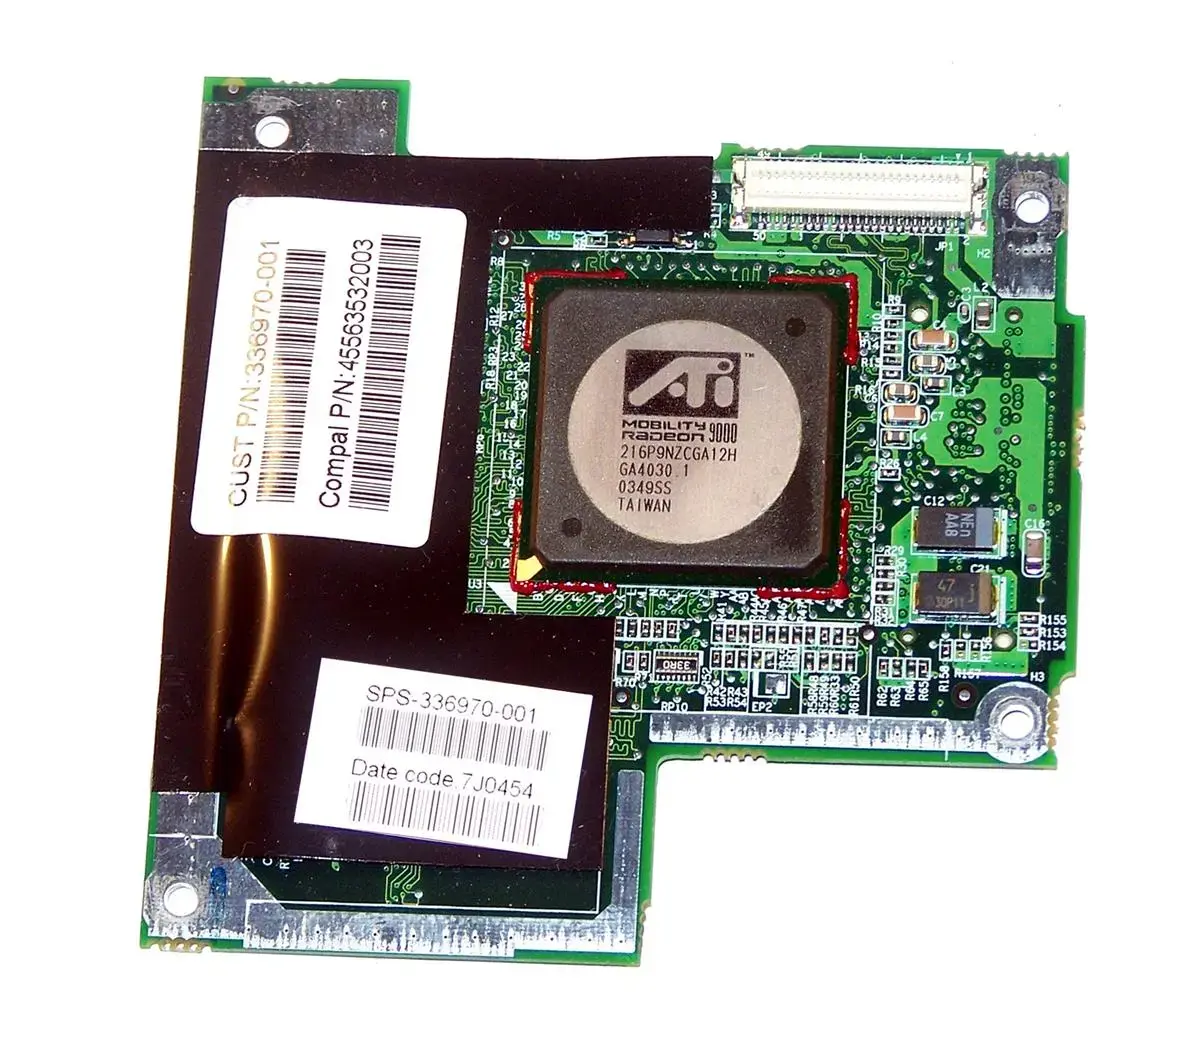 336970001N HP 64MB ATI Mobility Radeon 9200 (M9+P) Graphics Controller Card for Presario X1000 & Pavilion ZT3000 Series